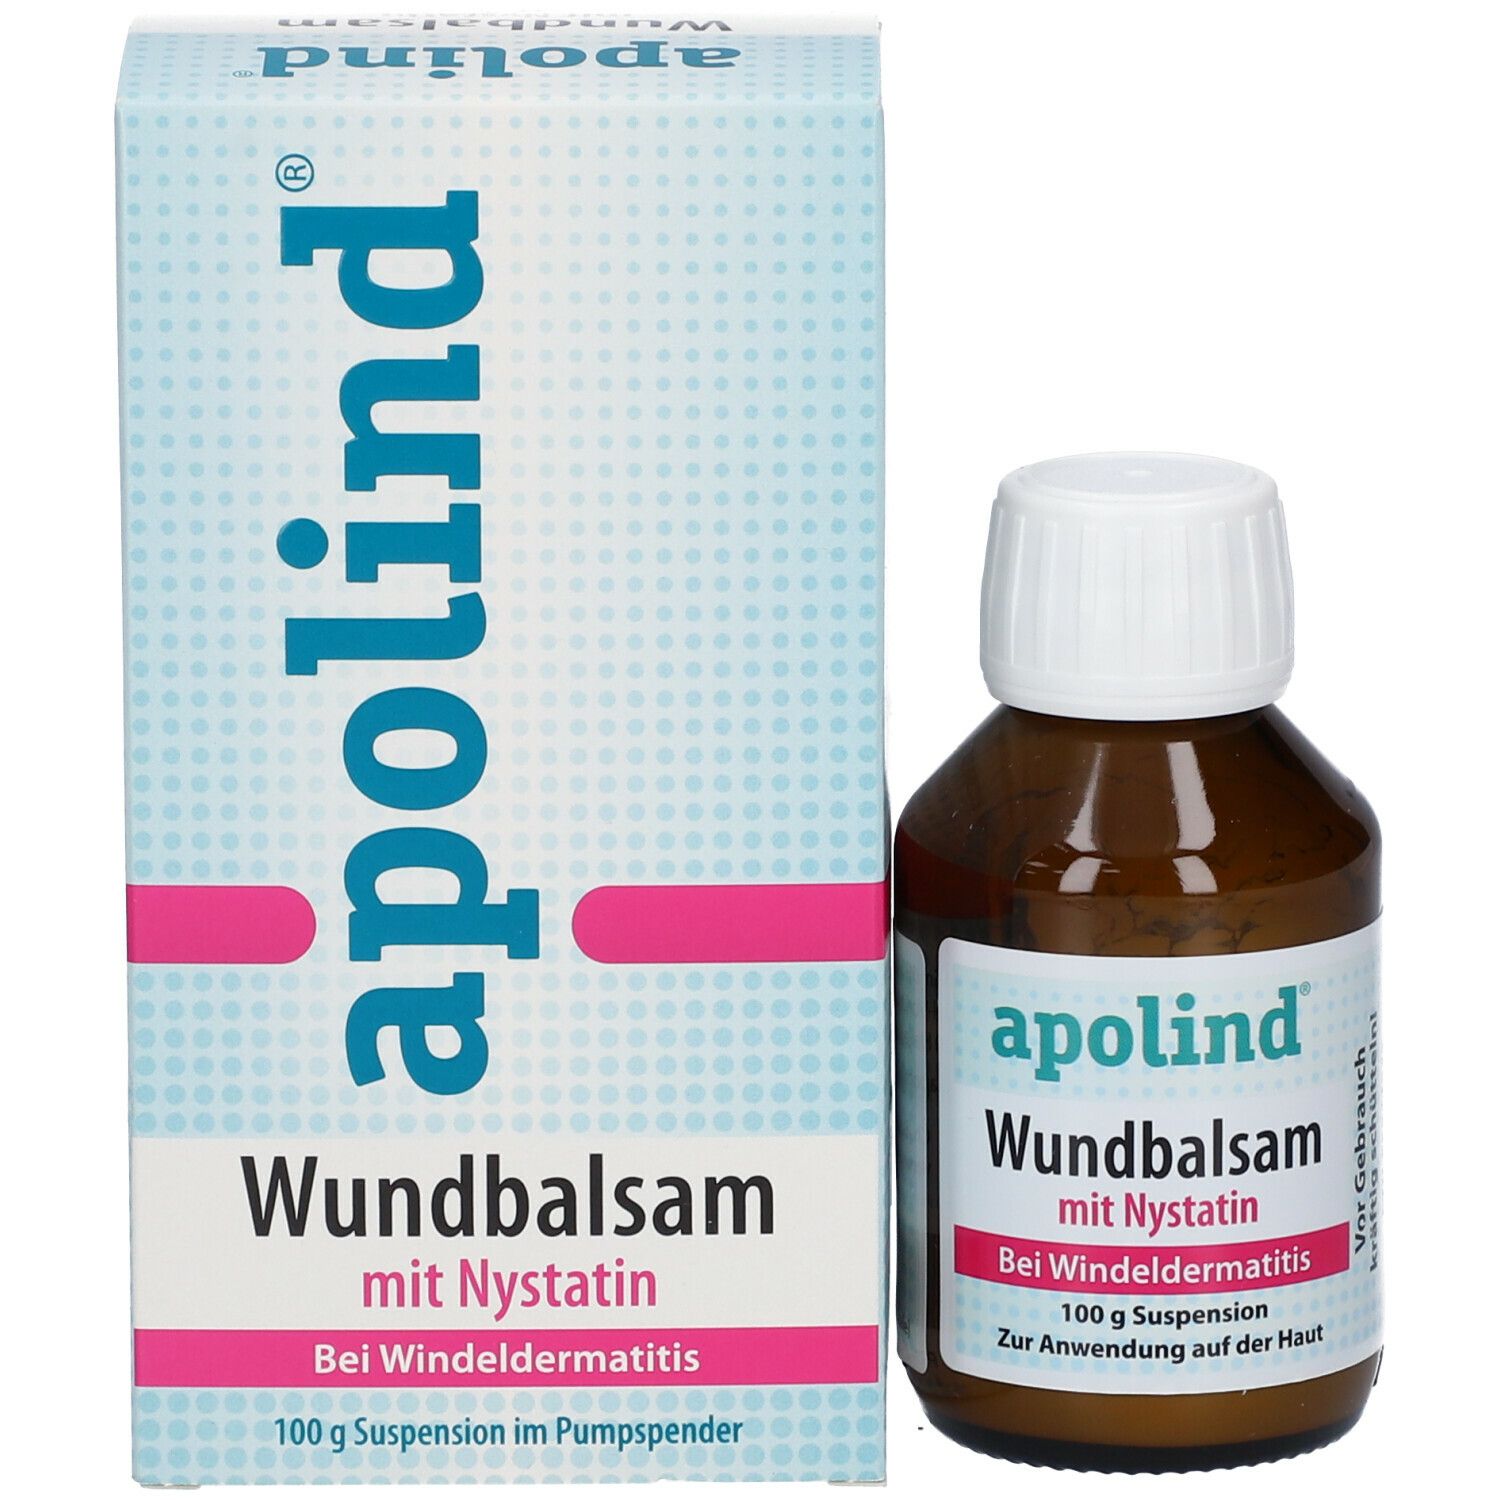 apolind® Wundbalsam mit Nystatin